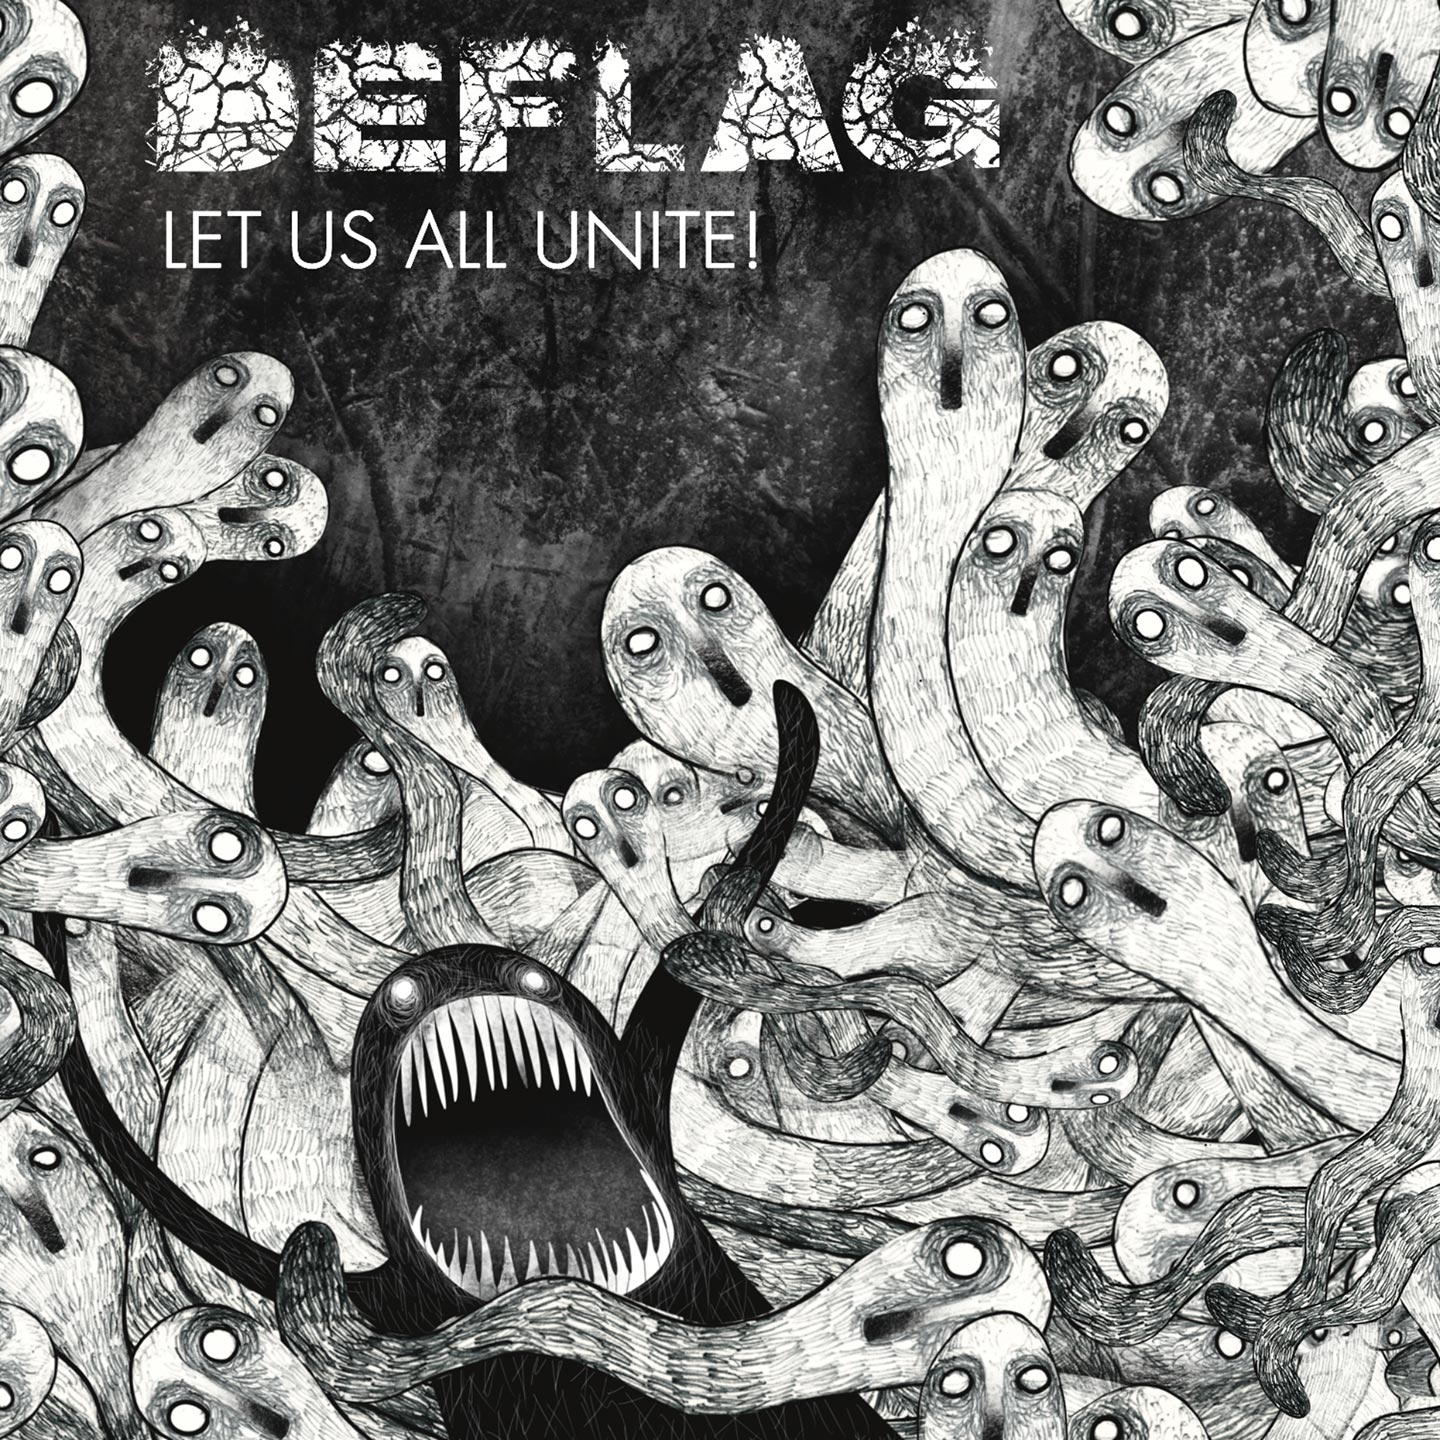 Deflag – “Let Us All Unite!”